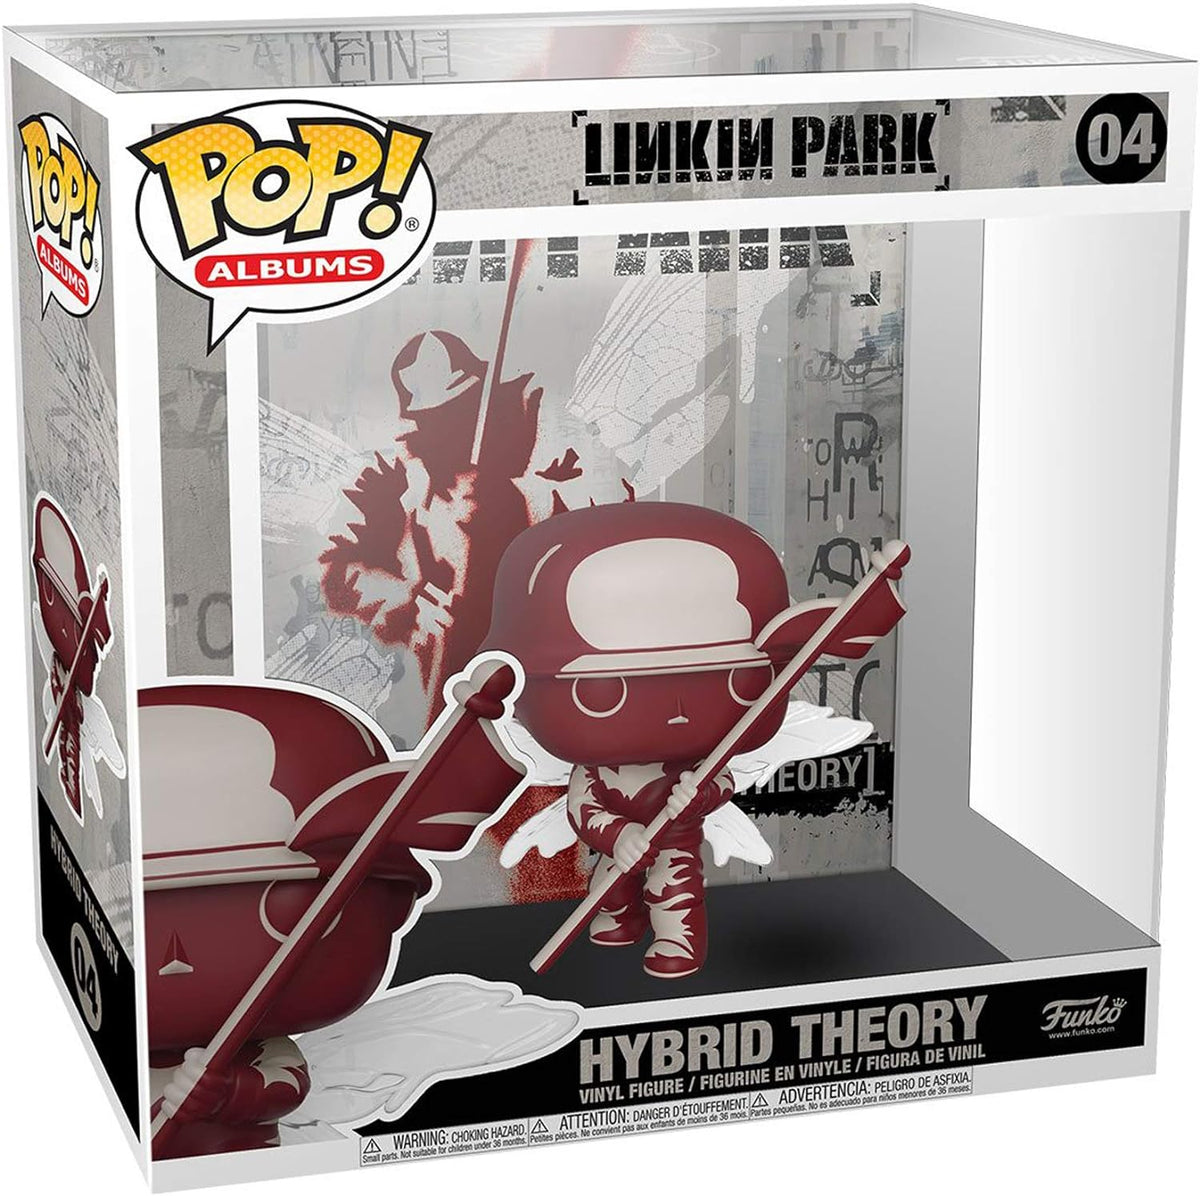 Funko Pop! Albums: Linkin Park - Hybrid Theory, Multicolor